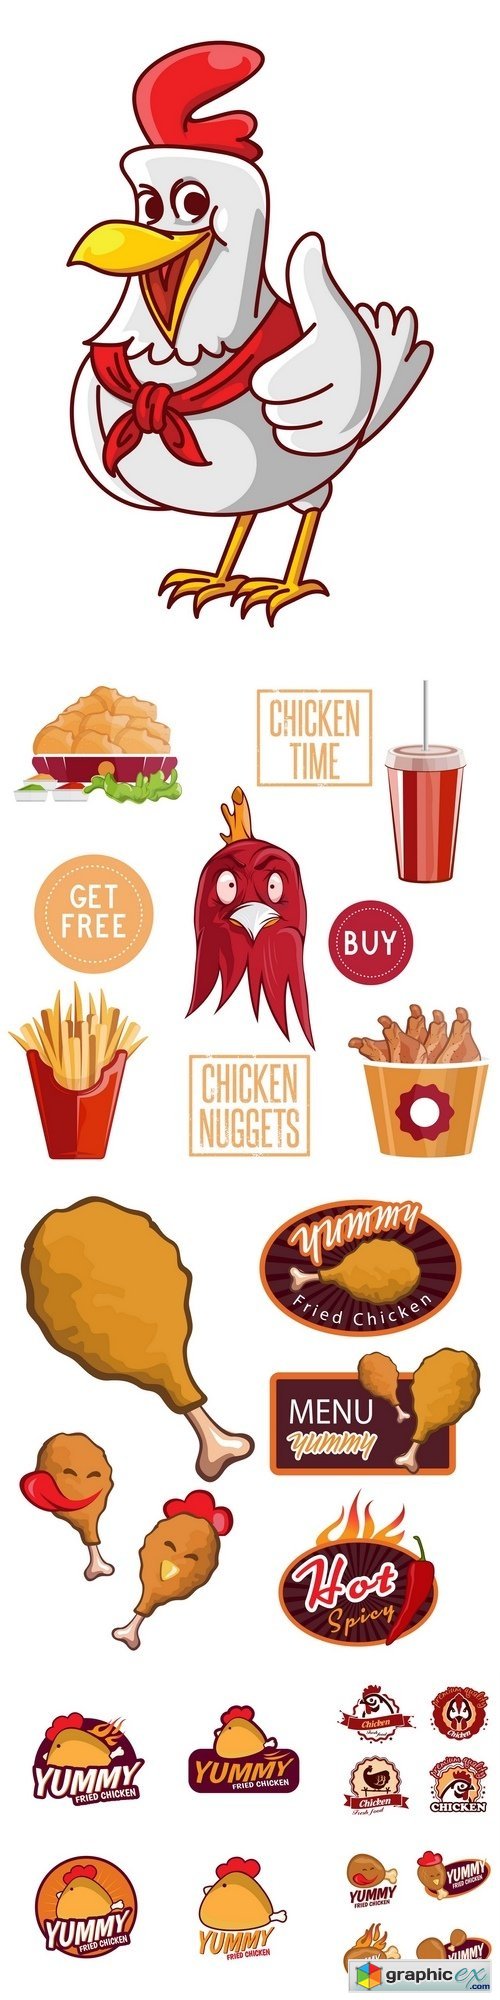 Yummy Fried chicken logo